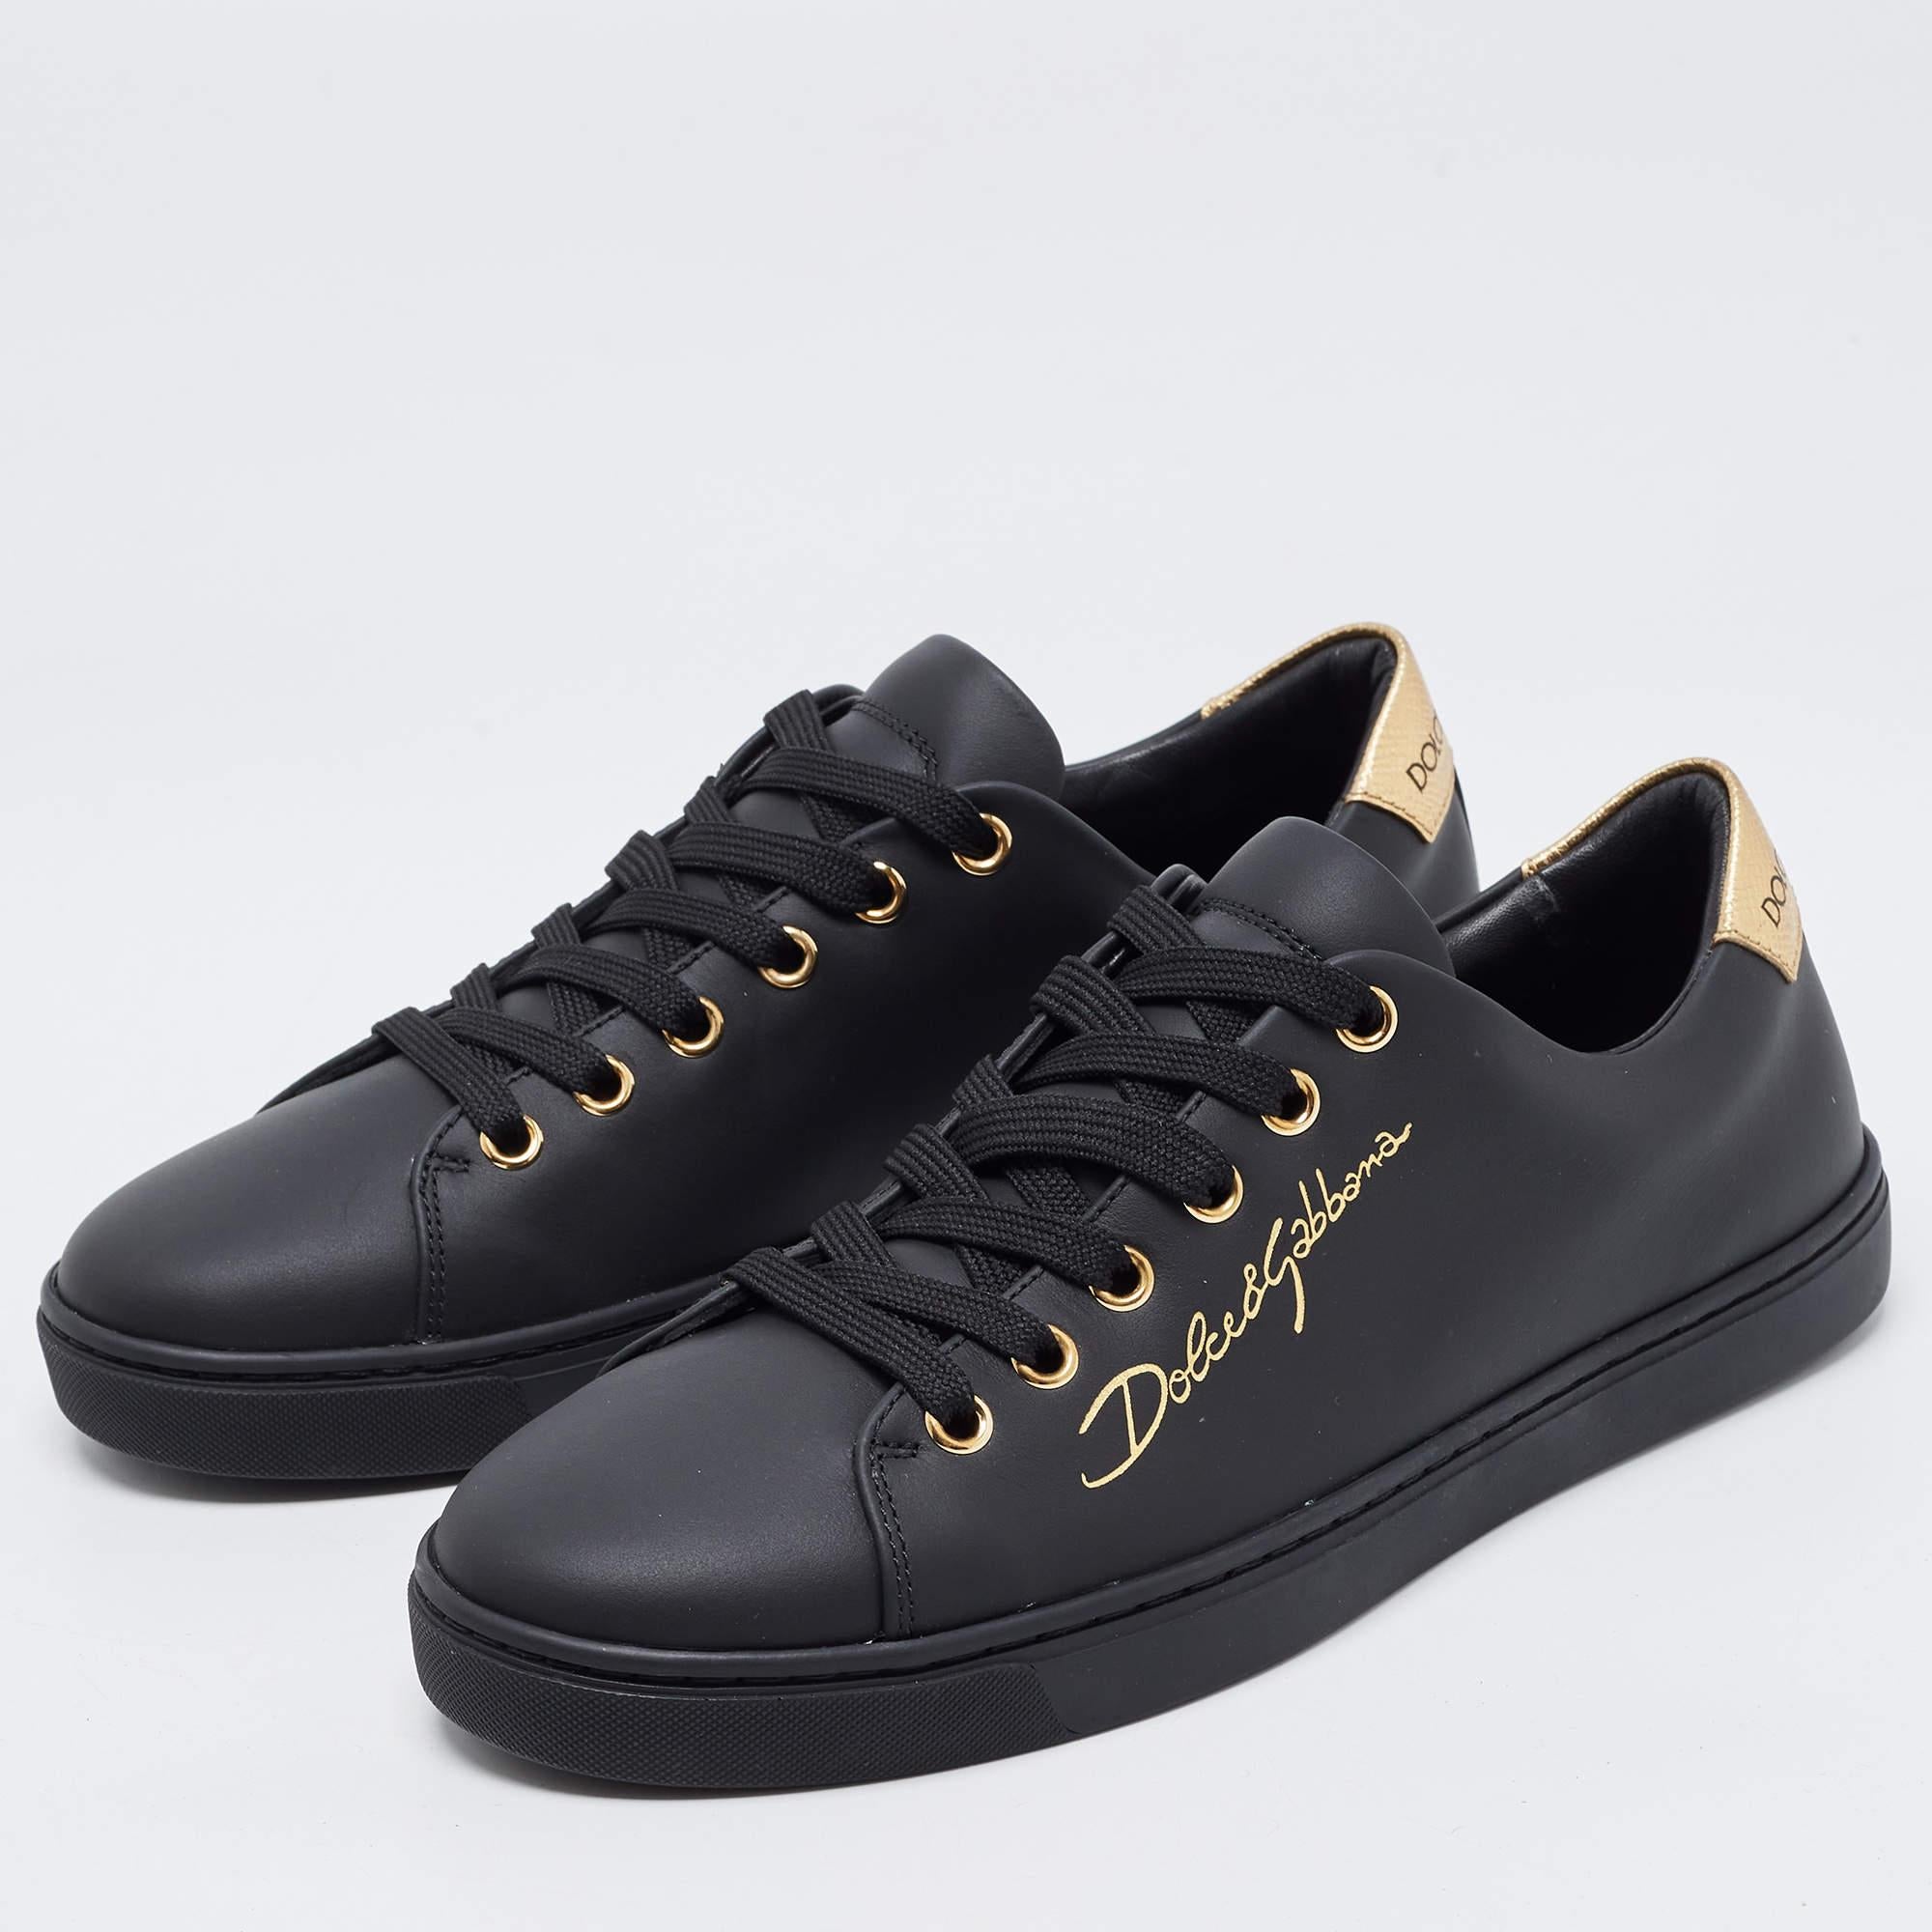 Dolce & Gabbana Black Leather Portofino Low Top Sneakers Size 37.5 2